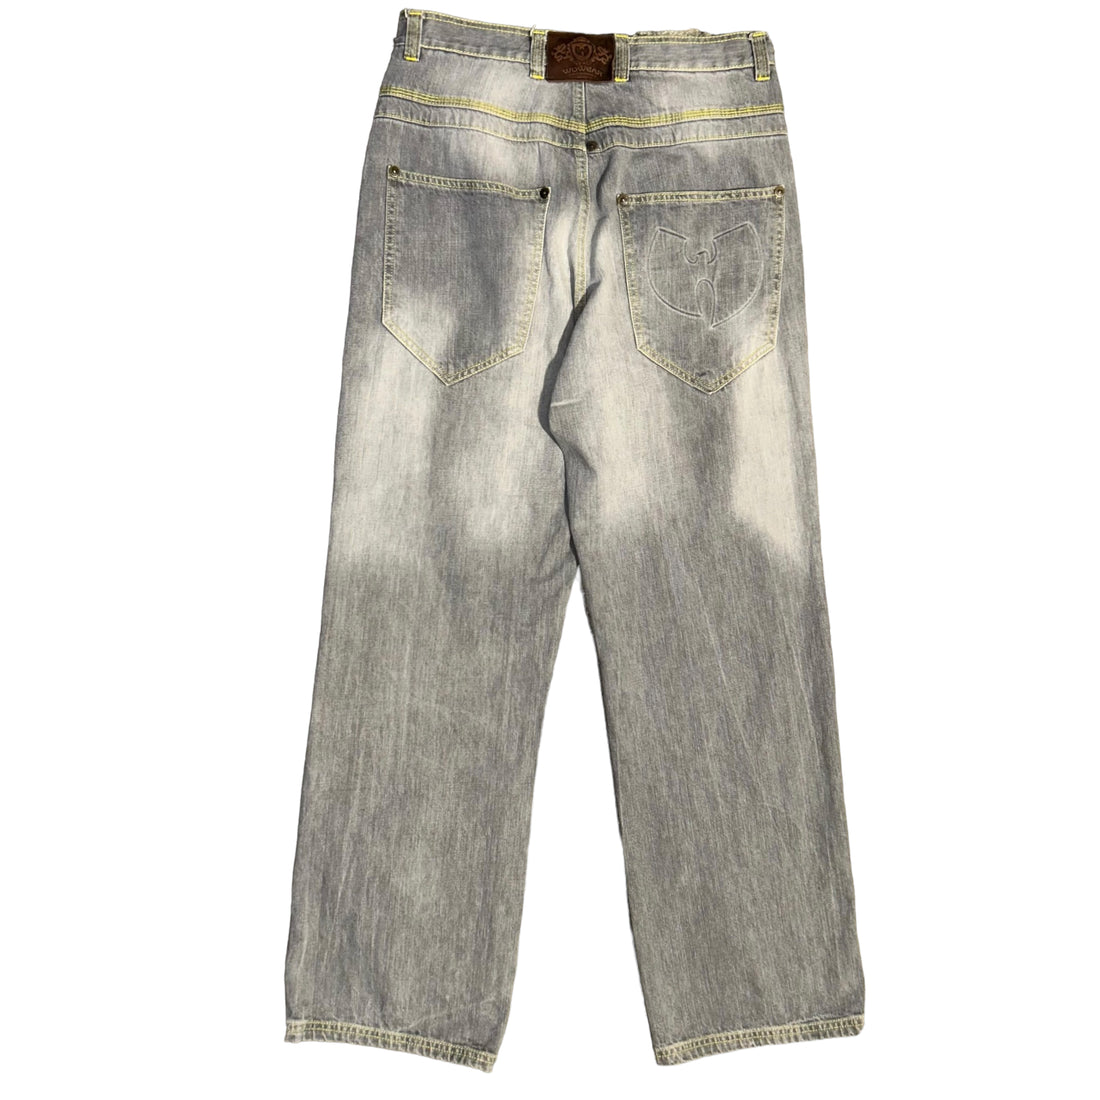 Baggy Jeans Wu Wear Wu-Tang Clan  (32 USA  M)